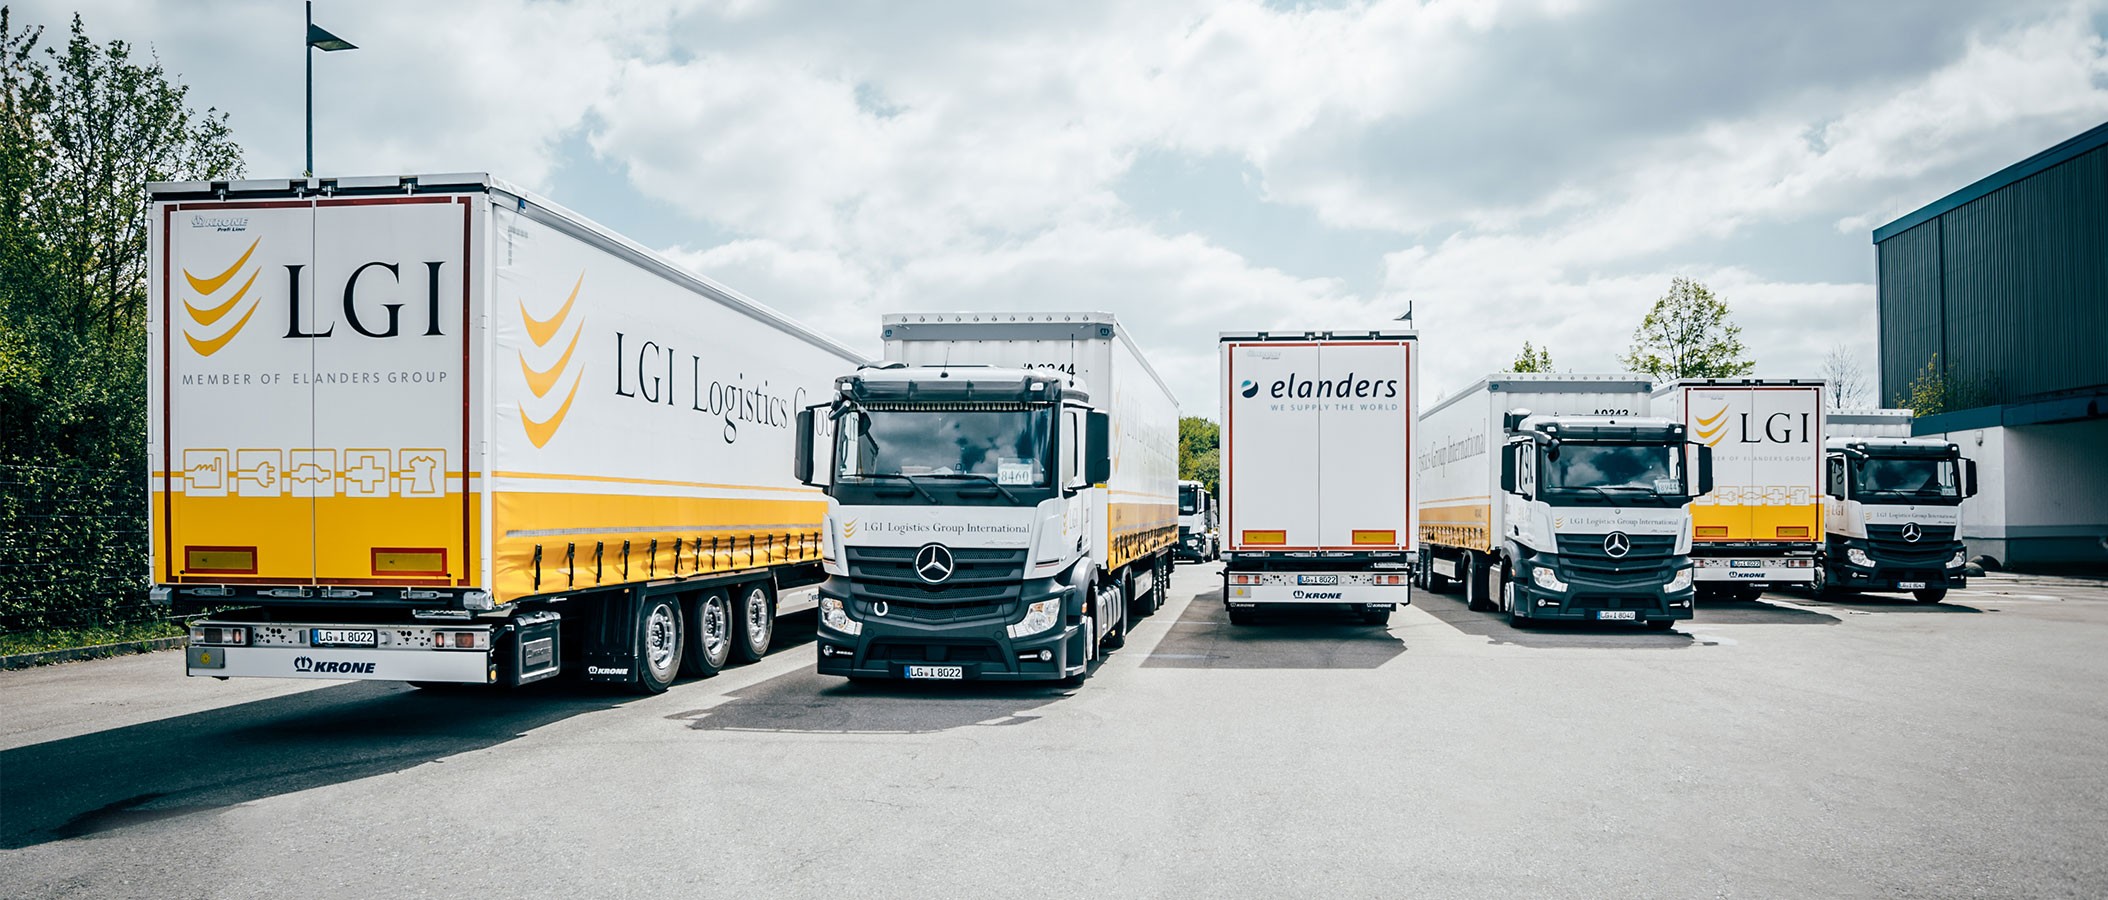 LGI company image showing six LGI branded trucks in a row next to a warehouse ©LGI